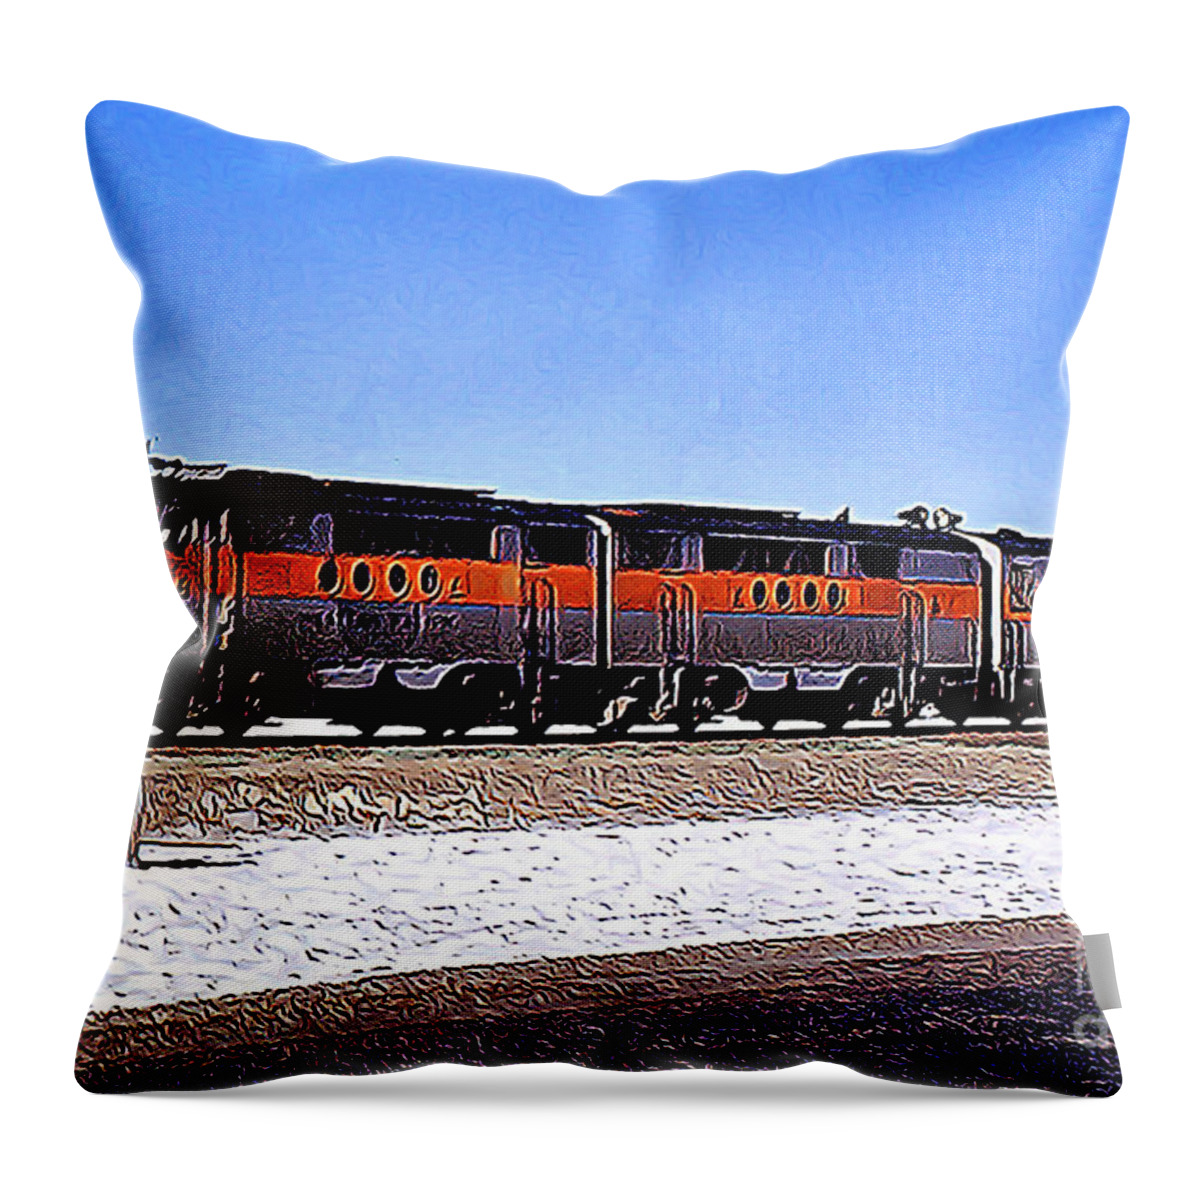 Diesel Locomotive Throw Pillow featuring the photograph Western Pacific Diesel Locomotive Trainset by Wernher Krutein